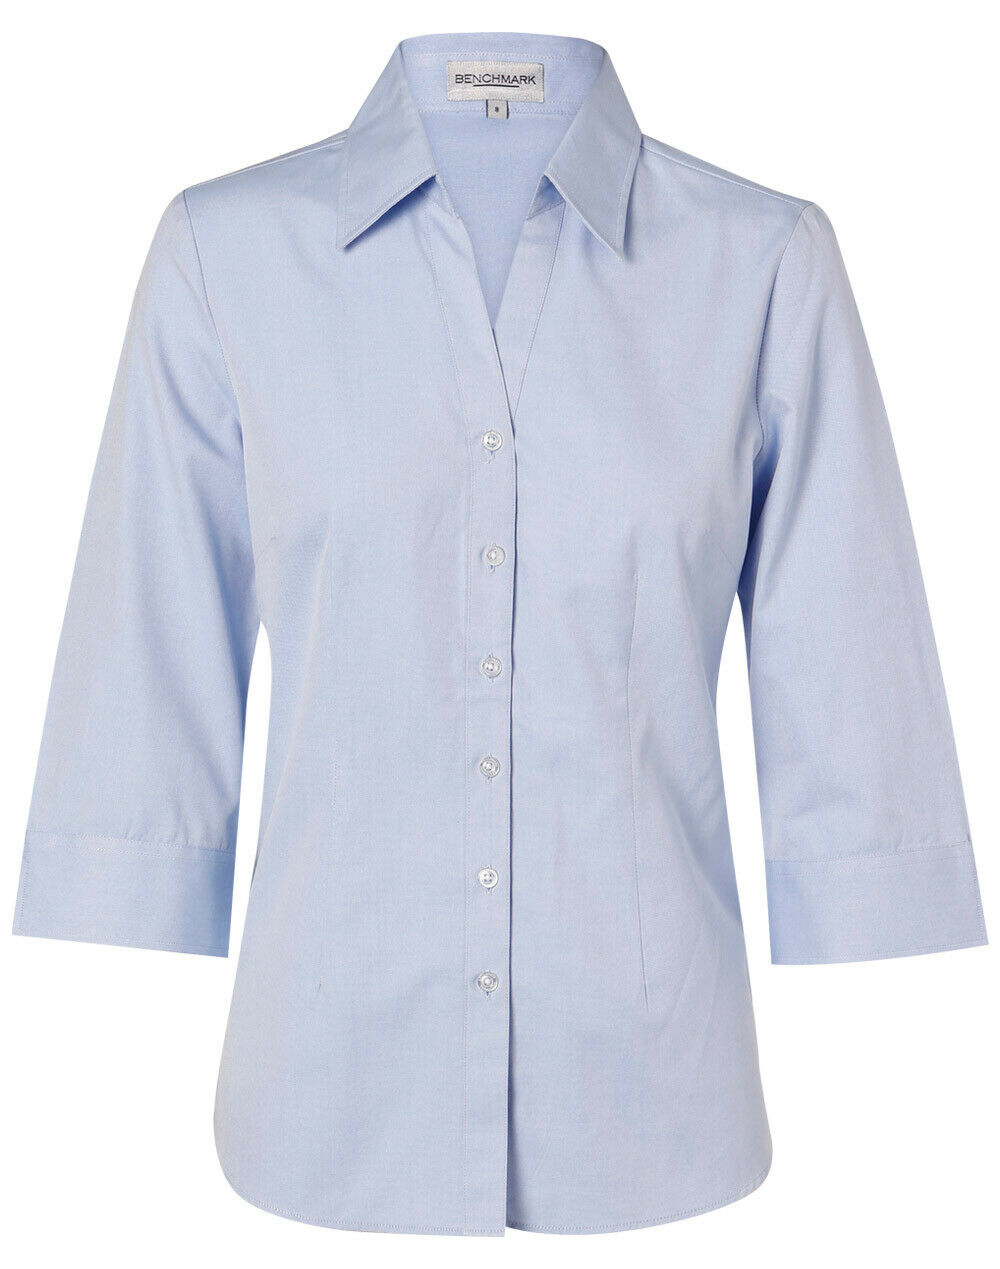 New Ladies Womens Cvc Oxford Shirt 3/4 Sleeve Work Suit Dressy Tailored Blue